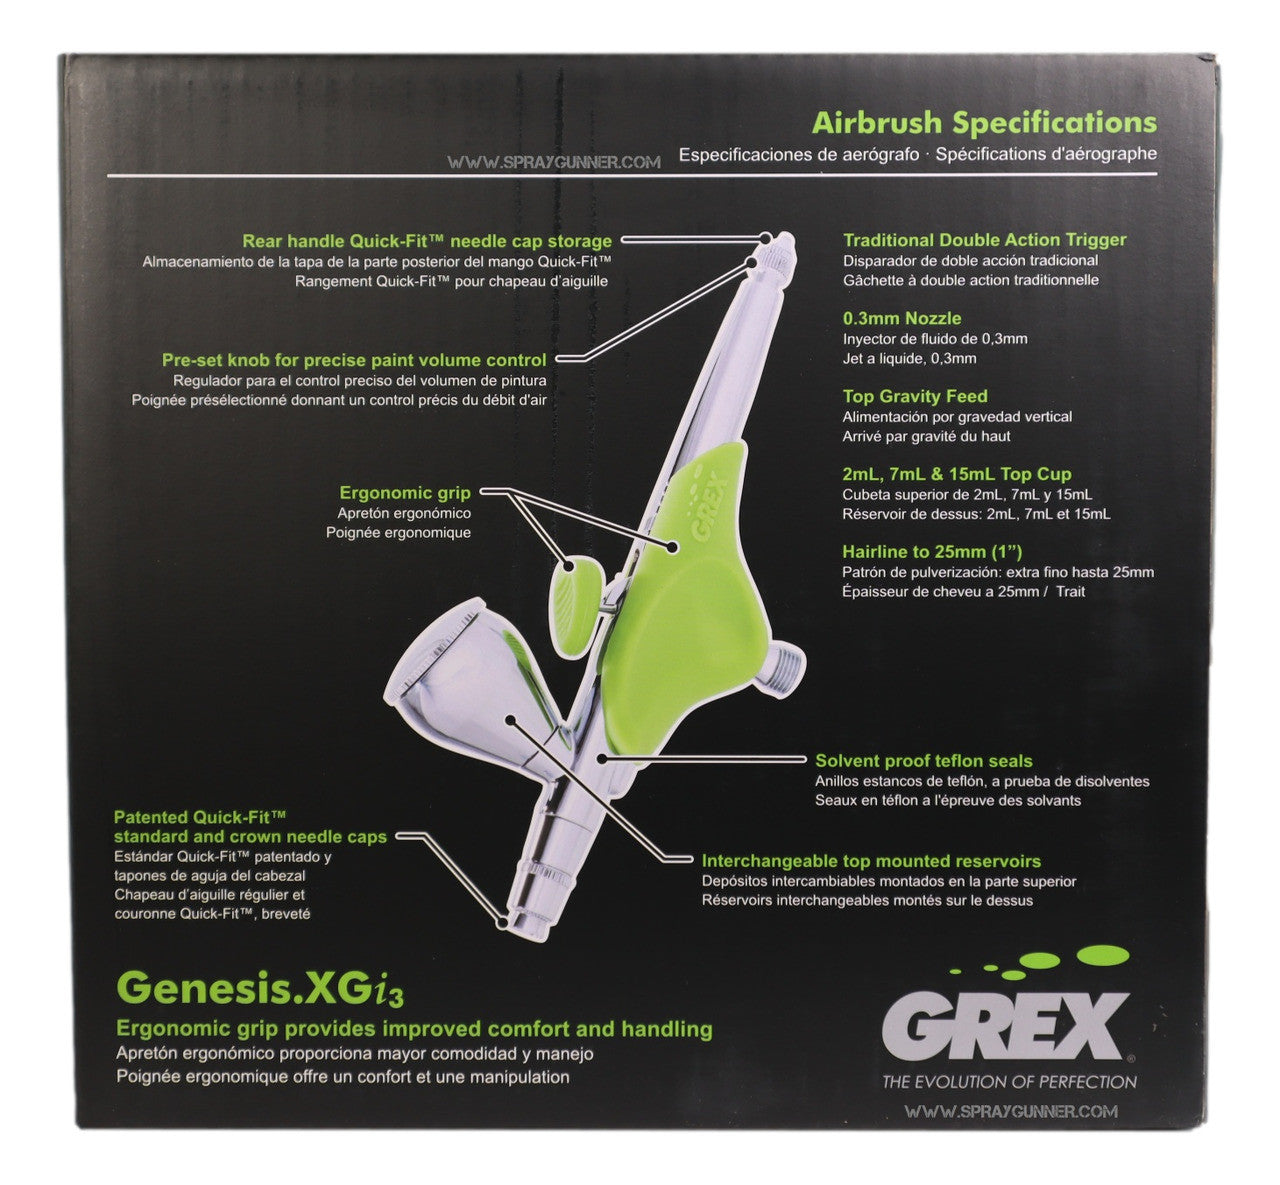 Grex GenesisXGi.3 Airbrush Combo Kit GCK05 Grex Airbrush